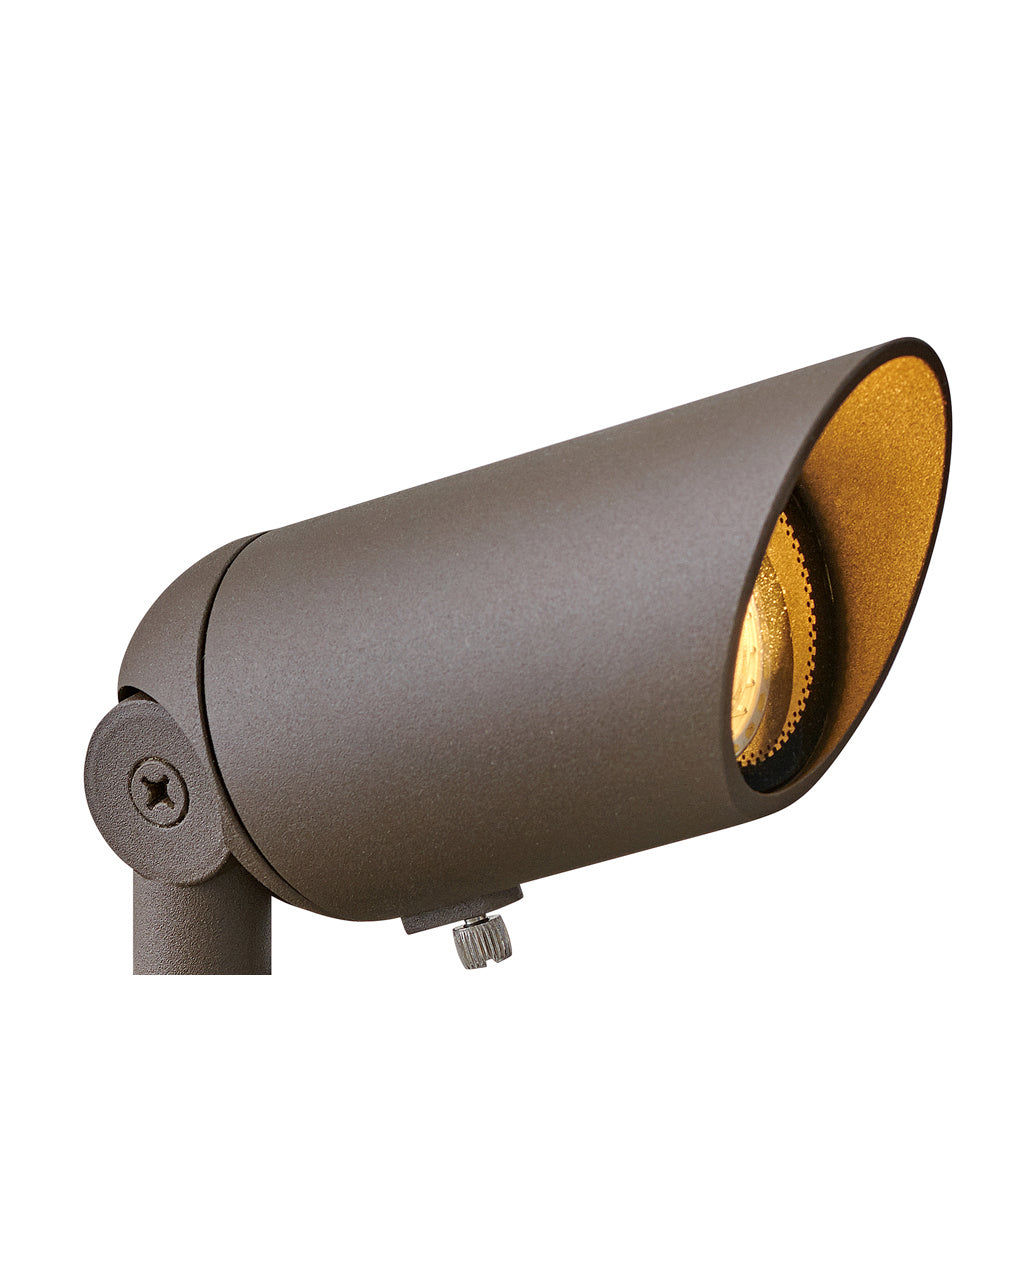 Hinkley - 1536TXB-LL - LED Spot Light - Accent Spot Light - Textured Brown